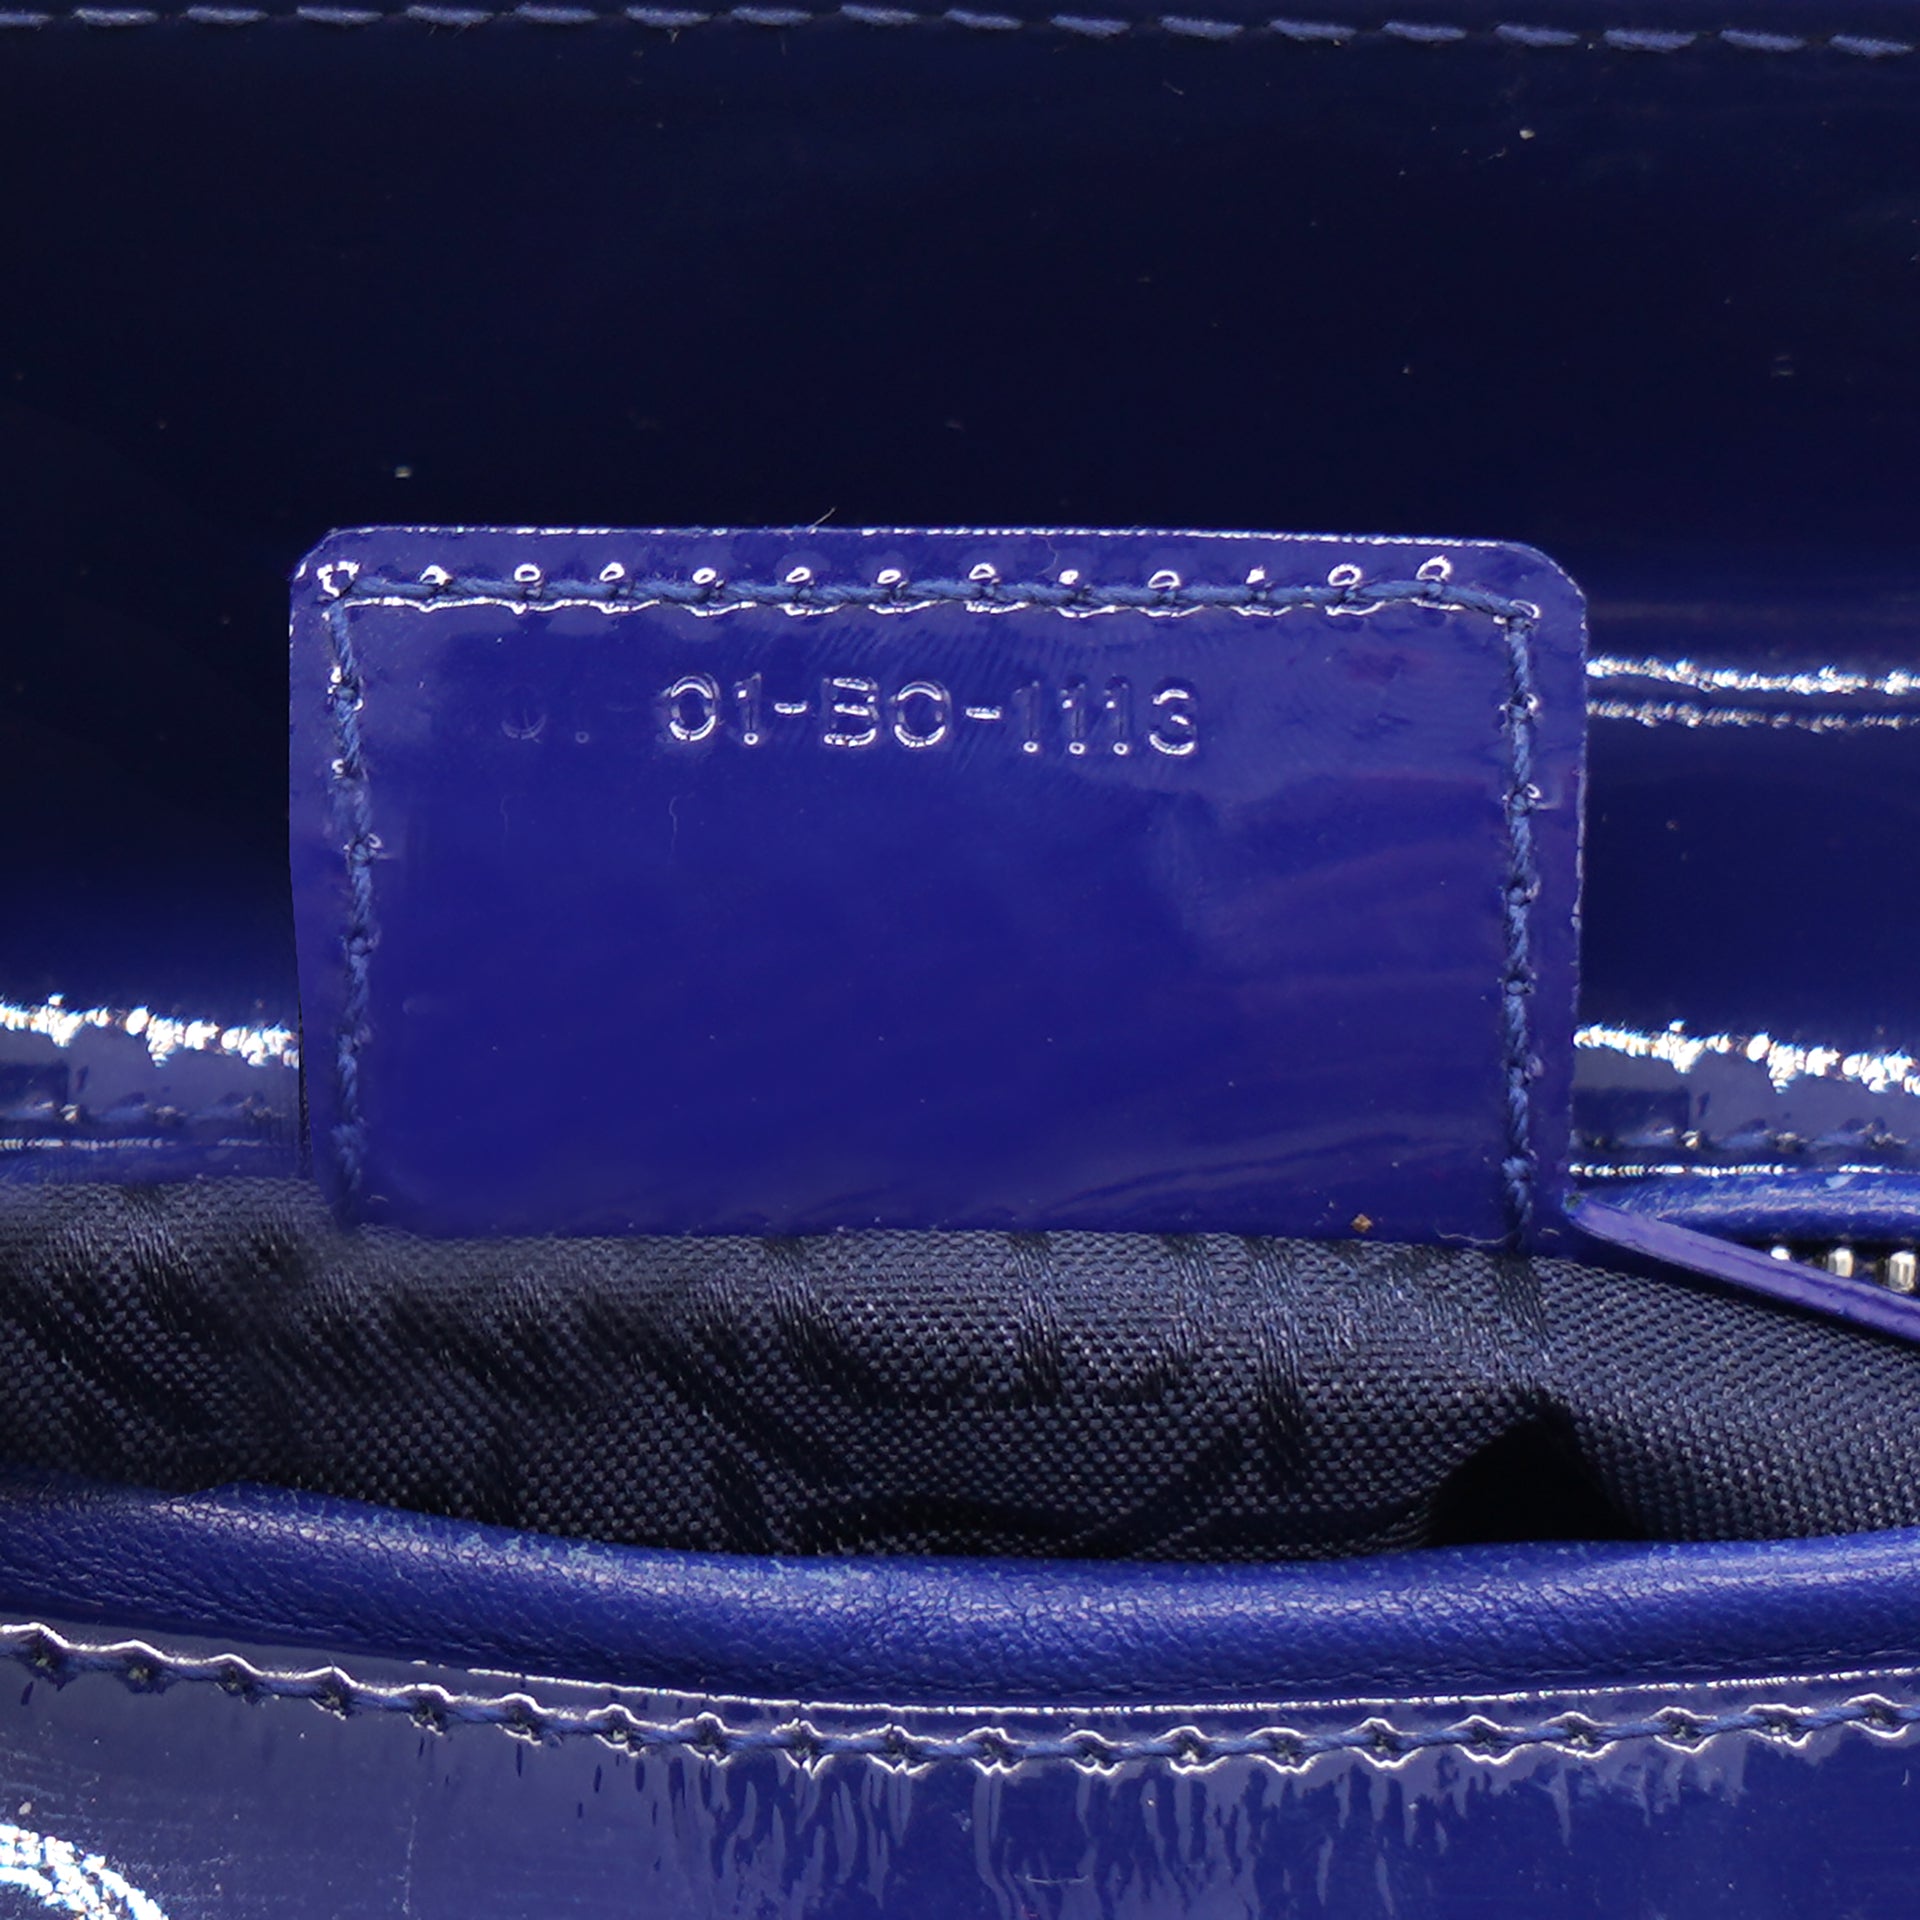 Lady Dior Medium Blue Patent Bag